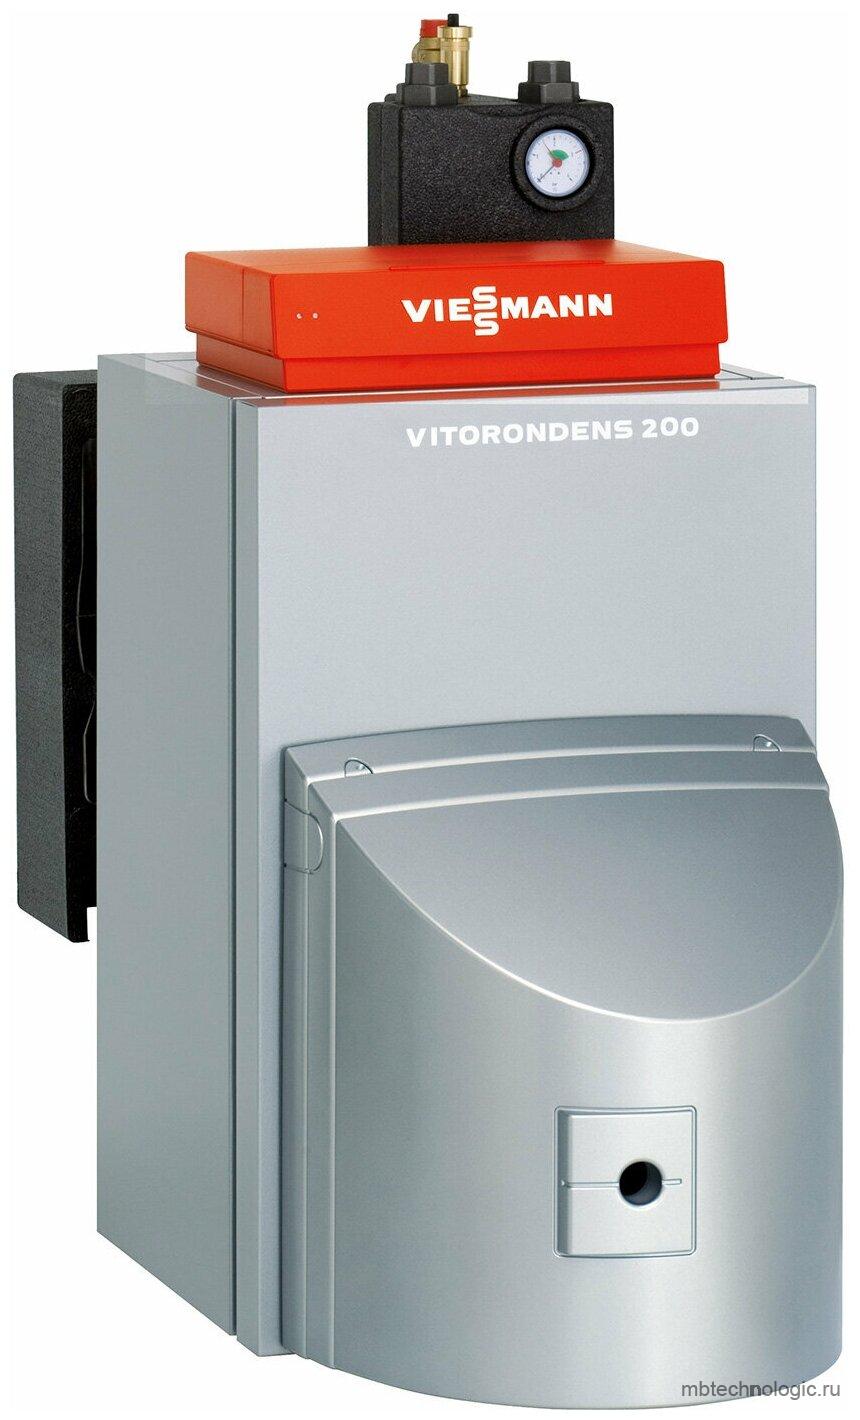 Viessmann Vitorondens 200-T BR2A033